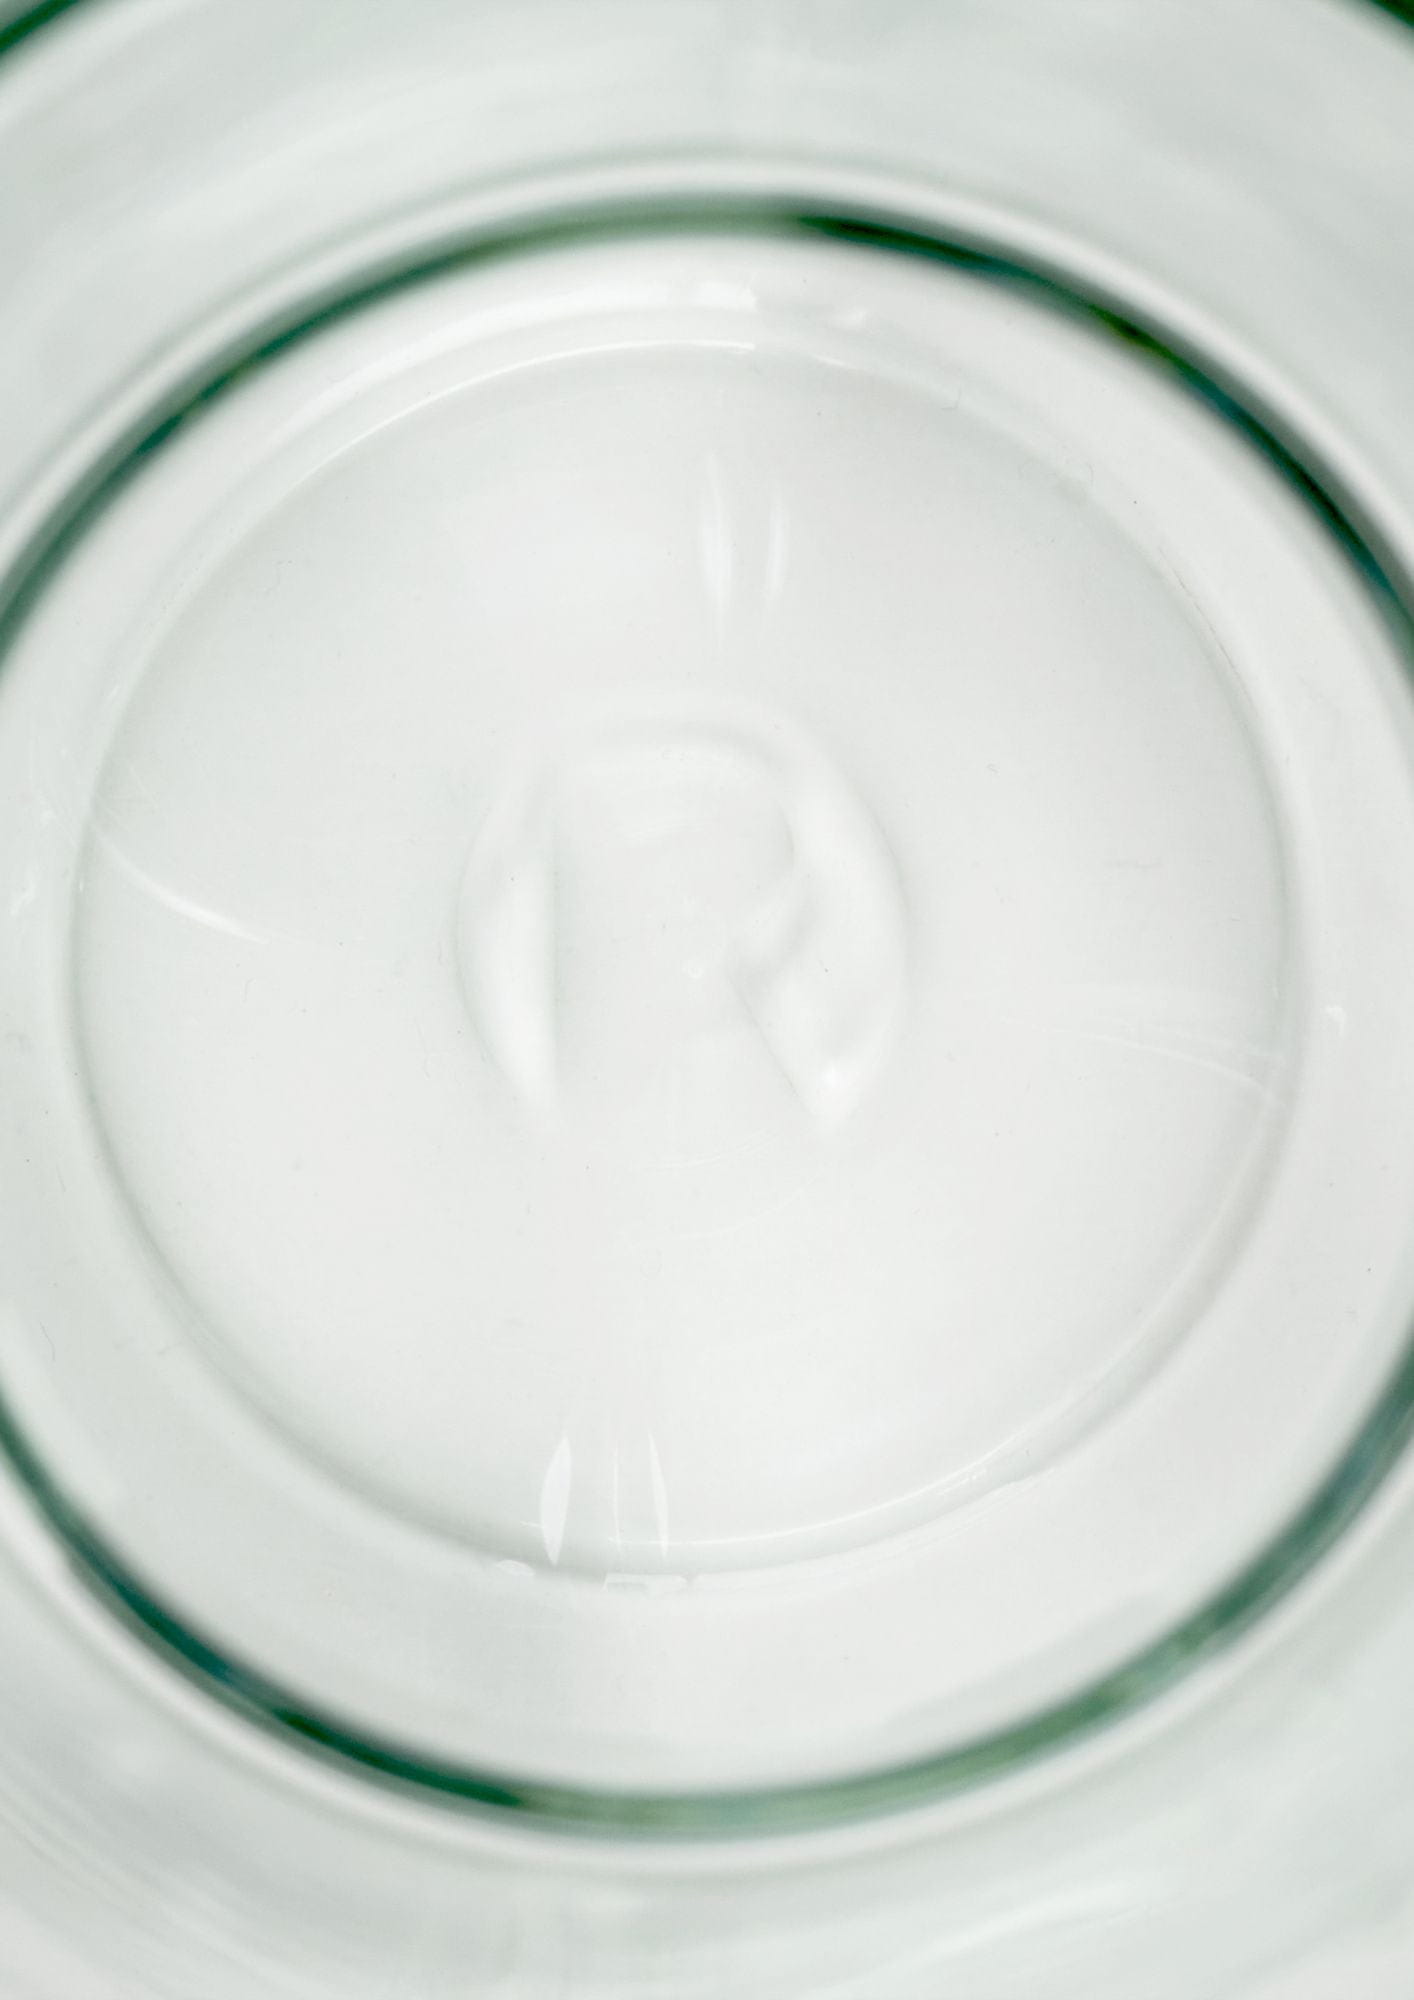 Rosendahl GC recycelte Wasser Carafe 900 ml, grün